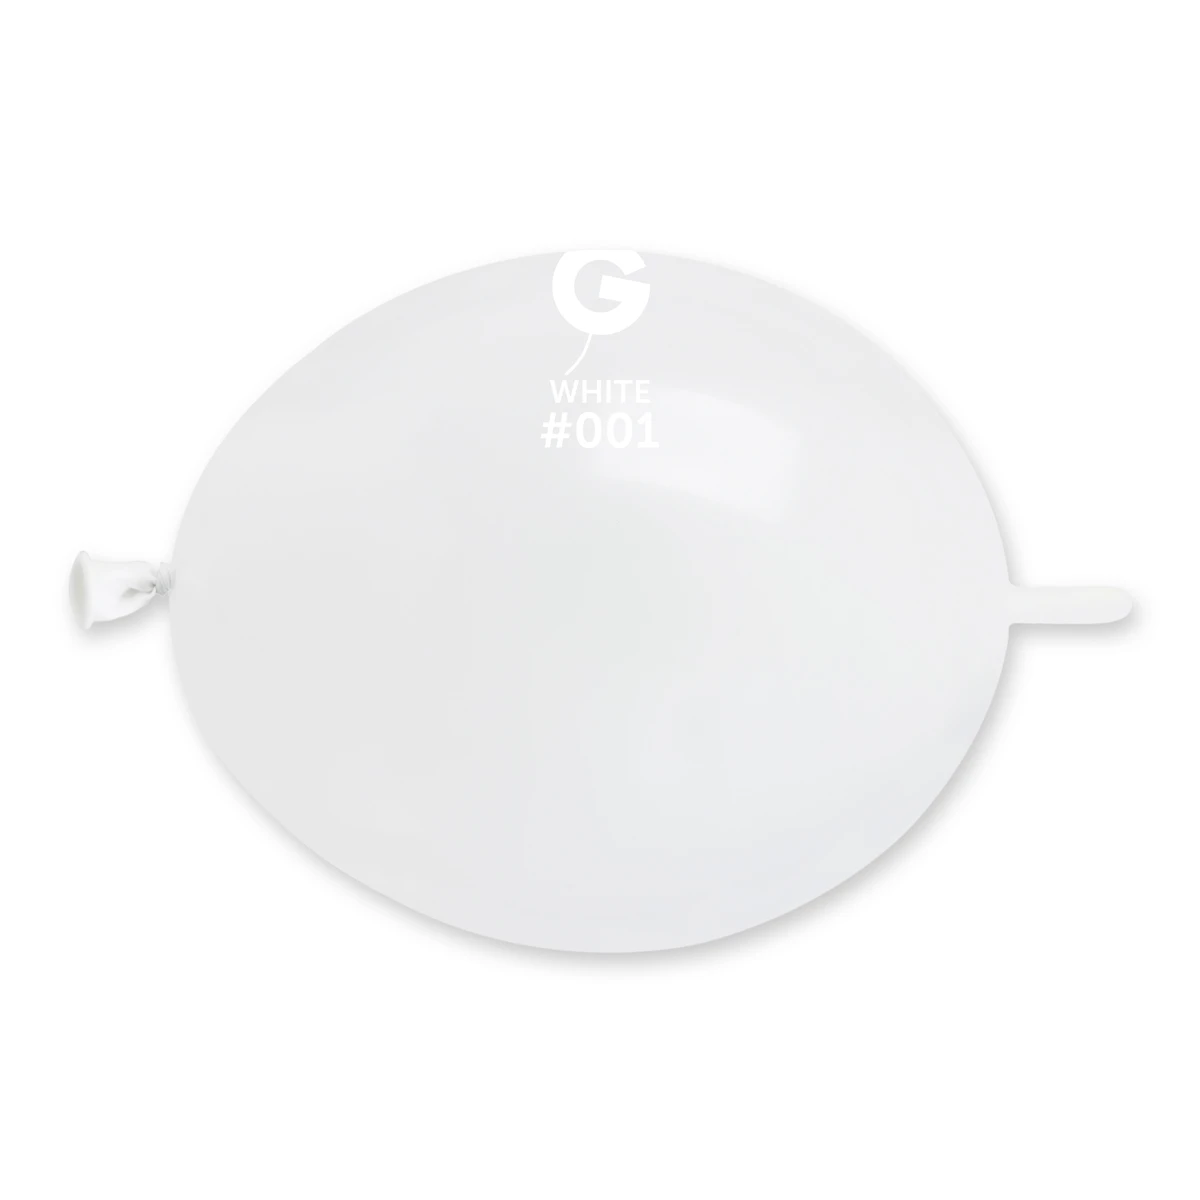 G-6” Link White  balloon #001 100ct